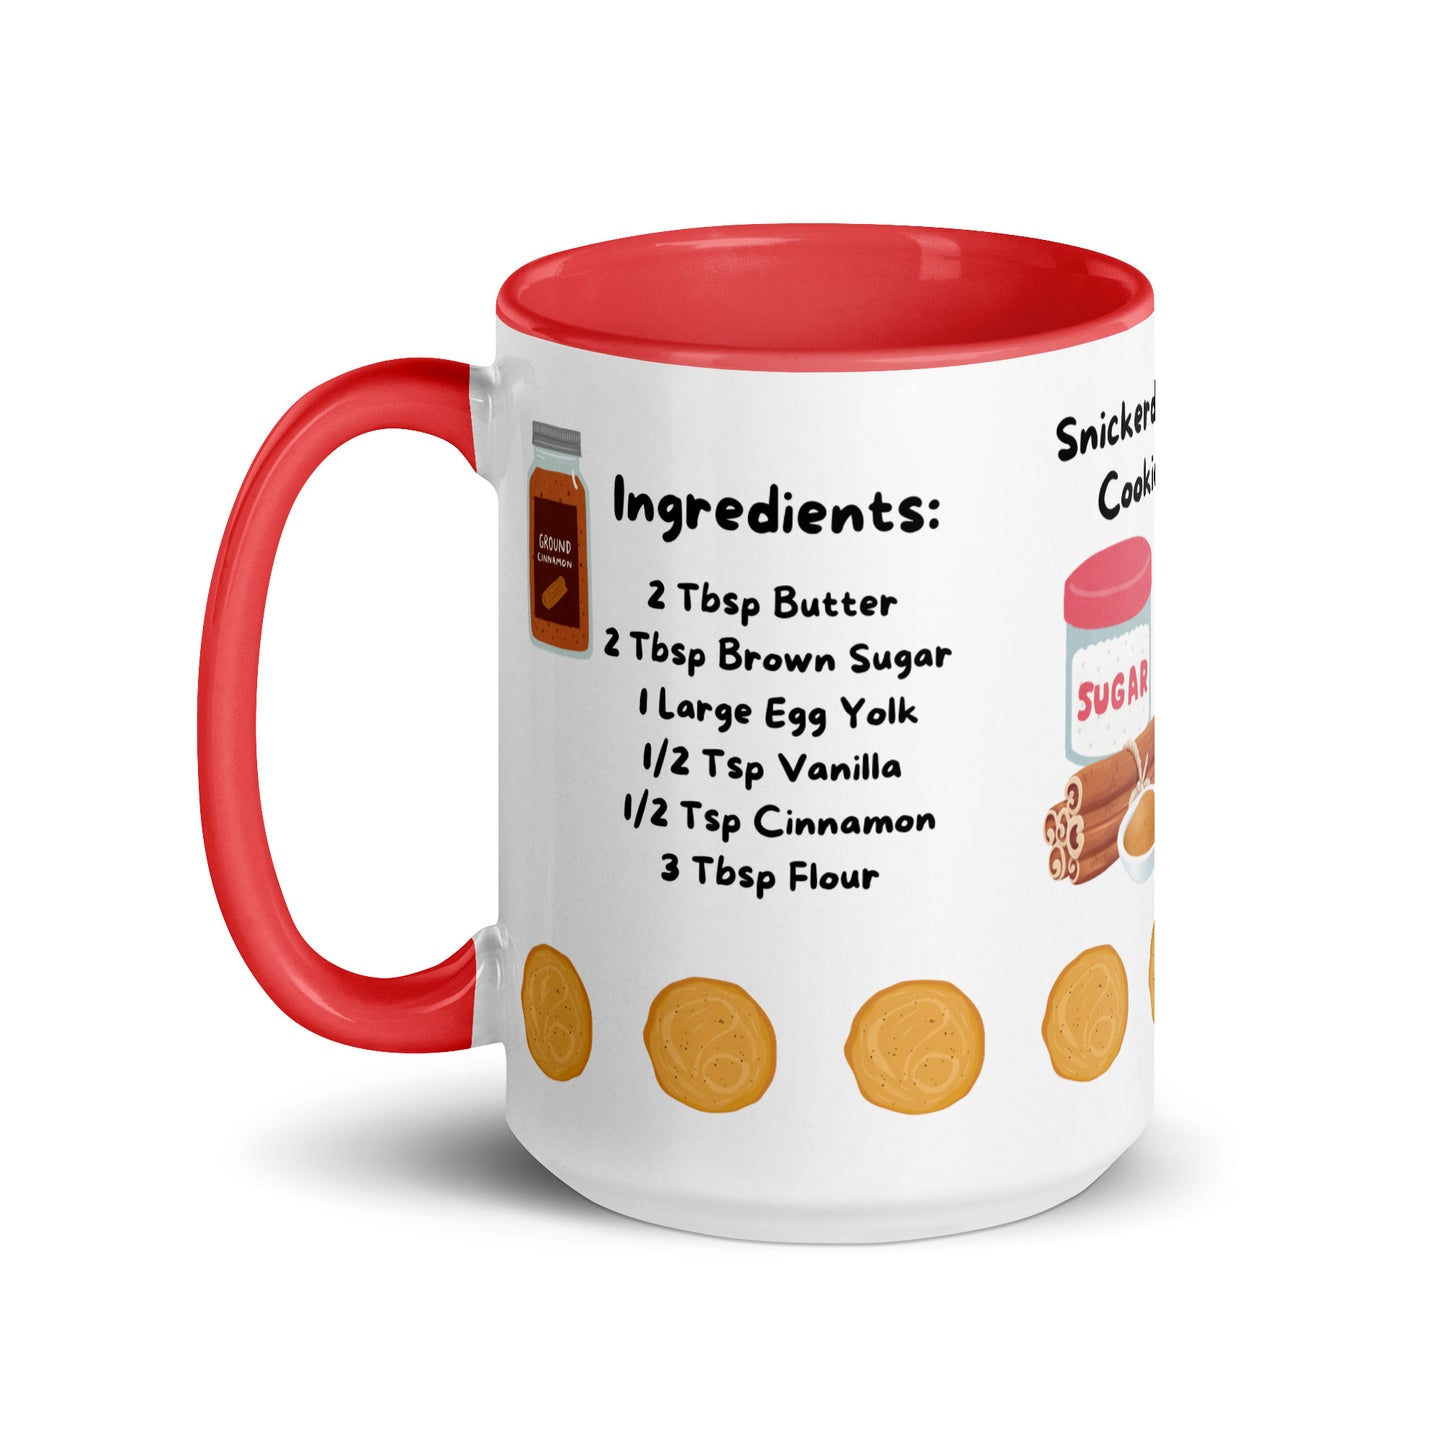 Snickerdoodle Cookie *Mug Cake Recipe Mug*